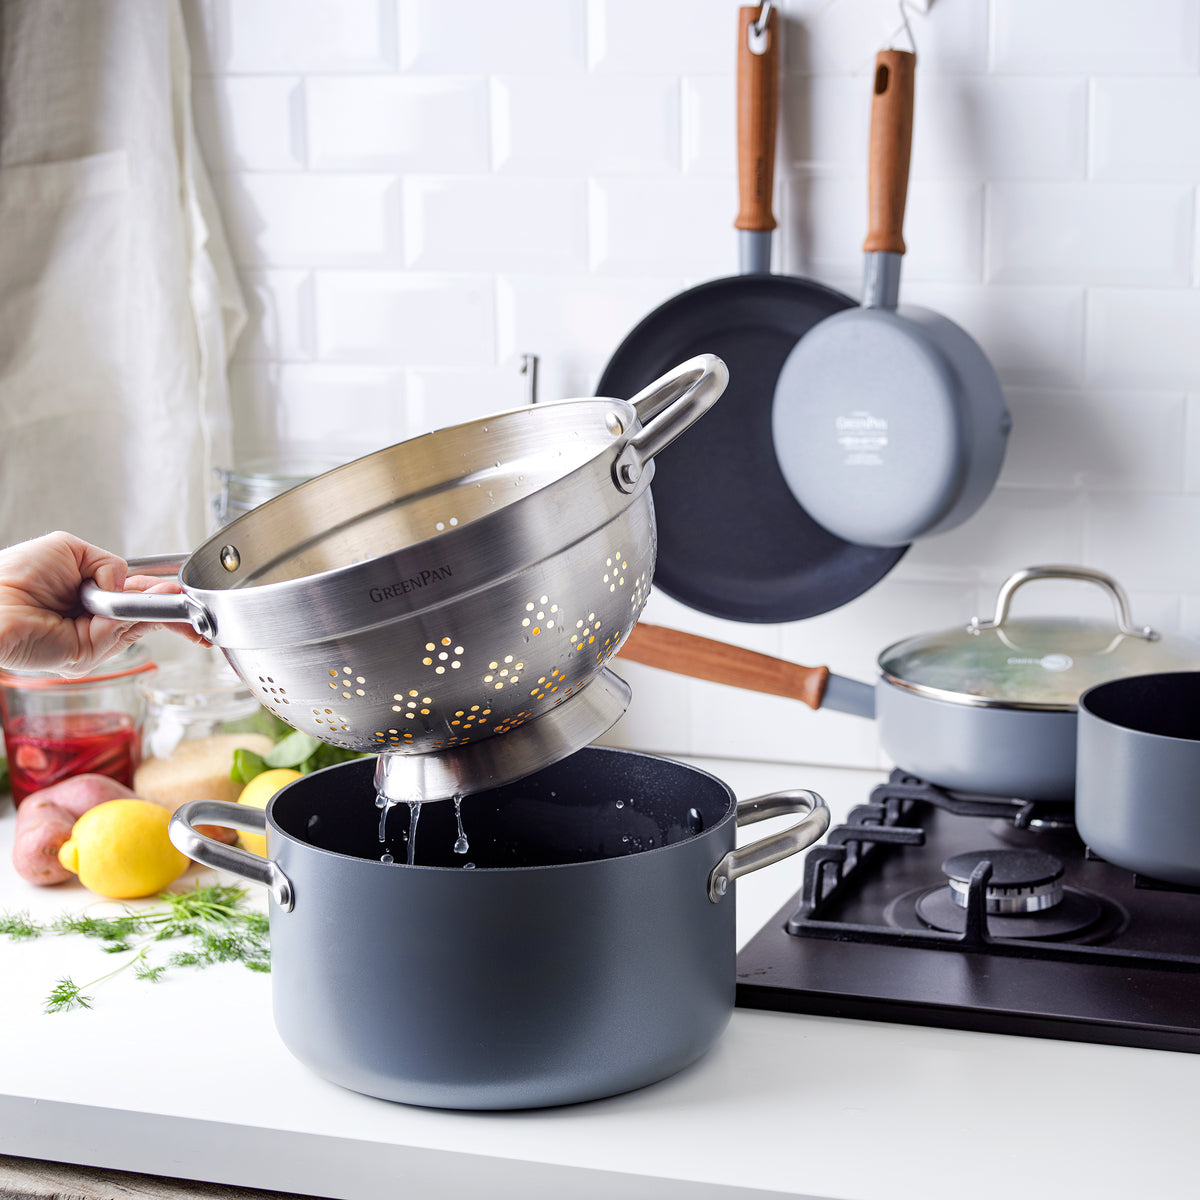 GreenPan Frying Pan Set - with spatula - Mayflower - ø 20 and 24 cm -  ceramic non-stick coating